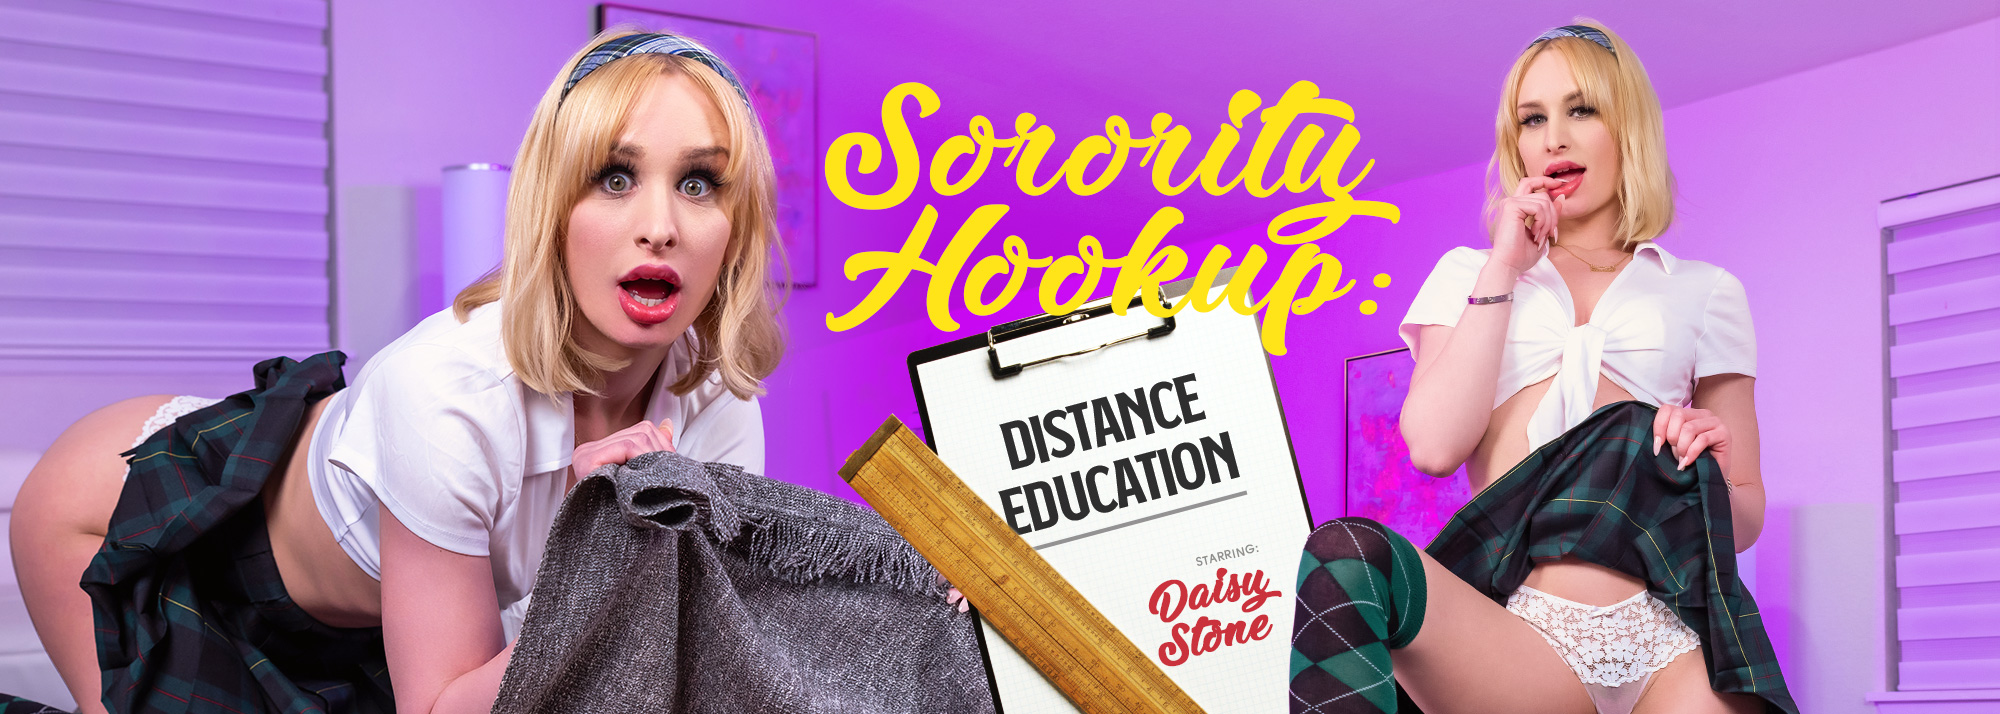 Sorority Hookup: Distance Education - VR Porn Video, Starring: Daisy Stone